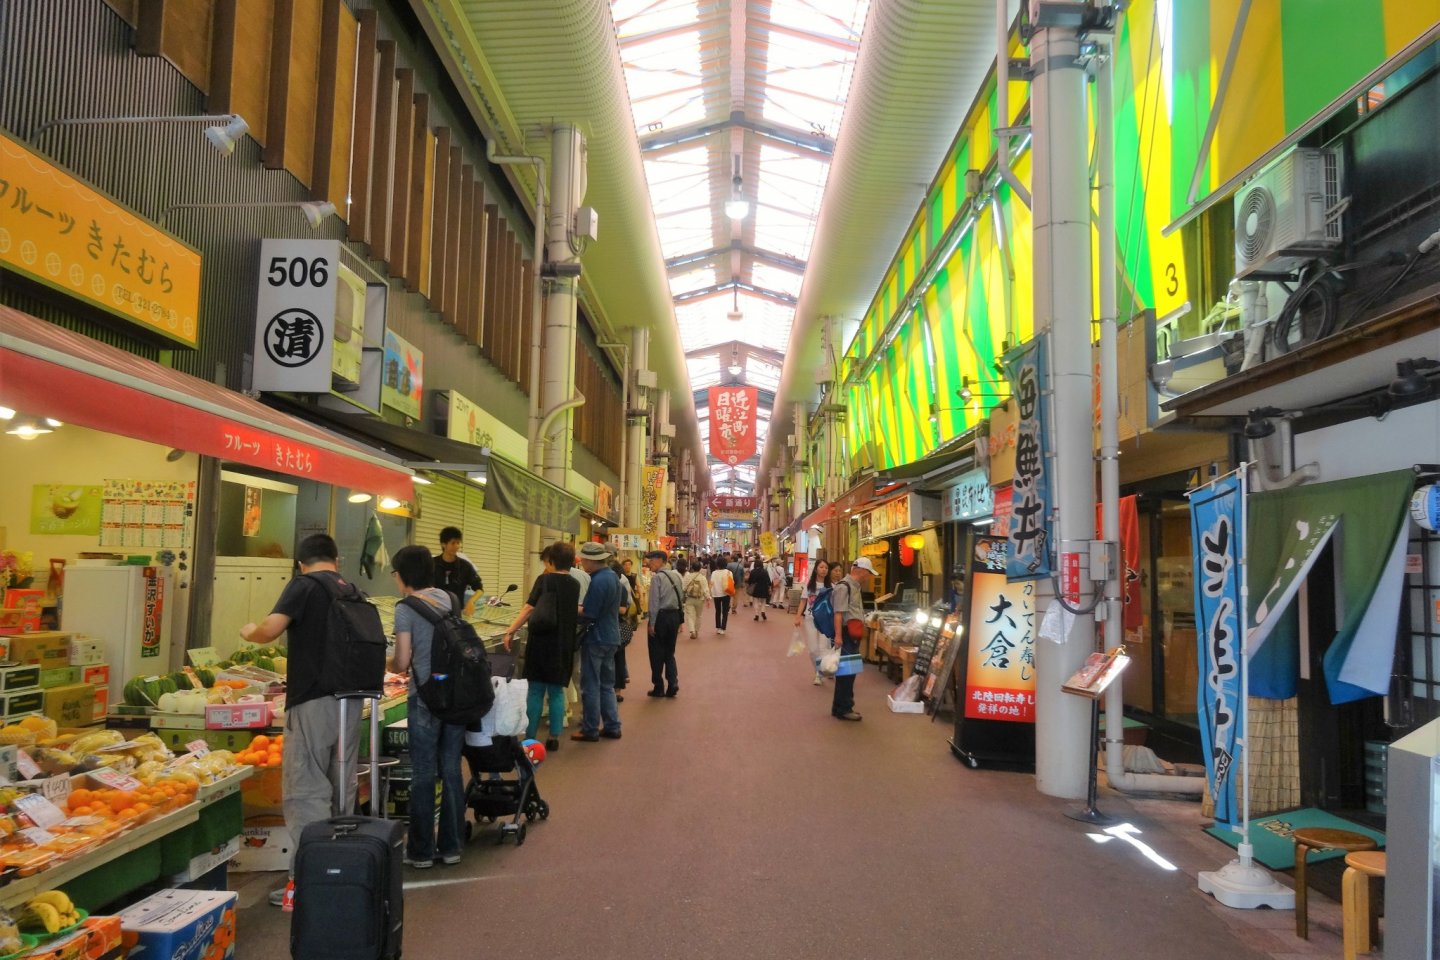 The Omicho Market in Kanazawa